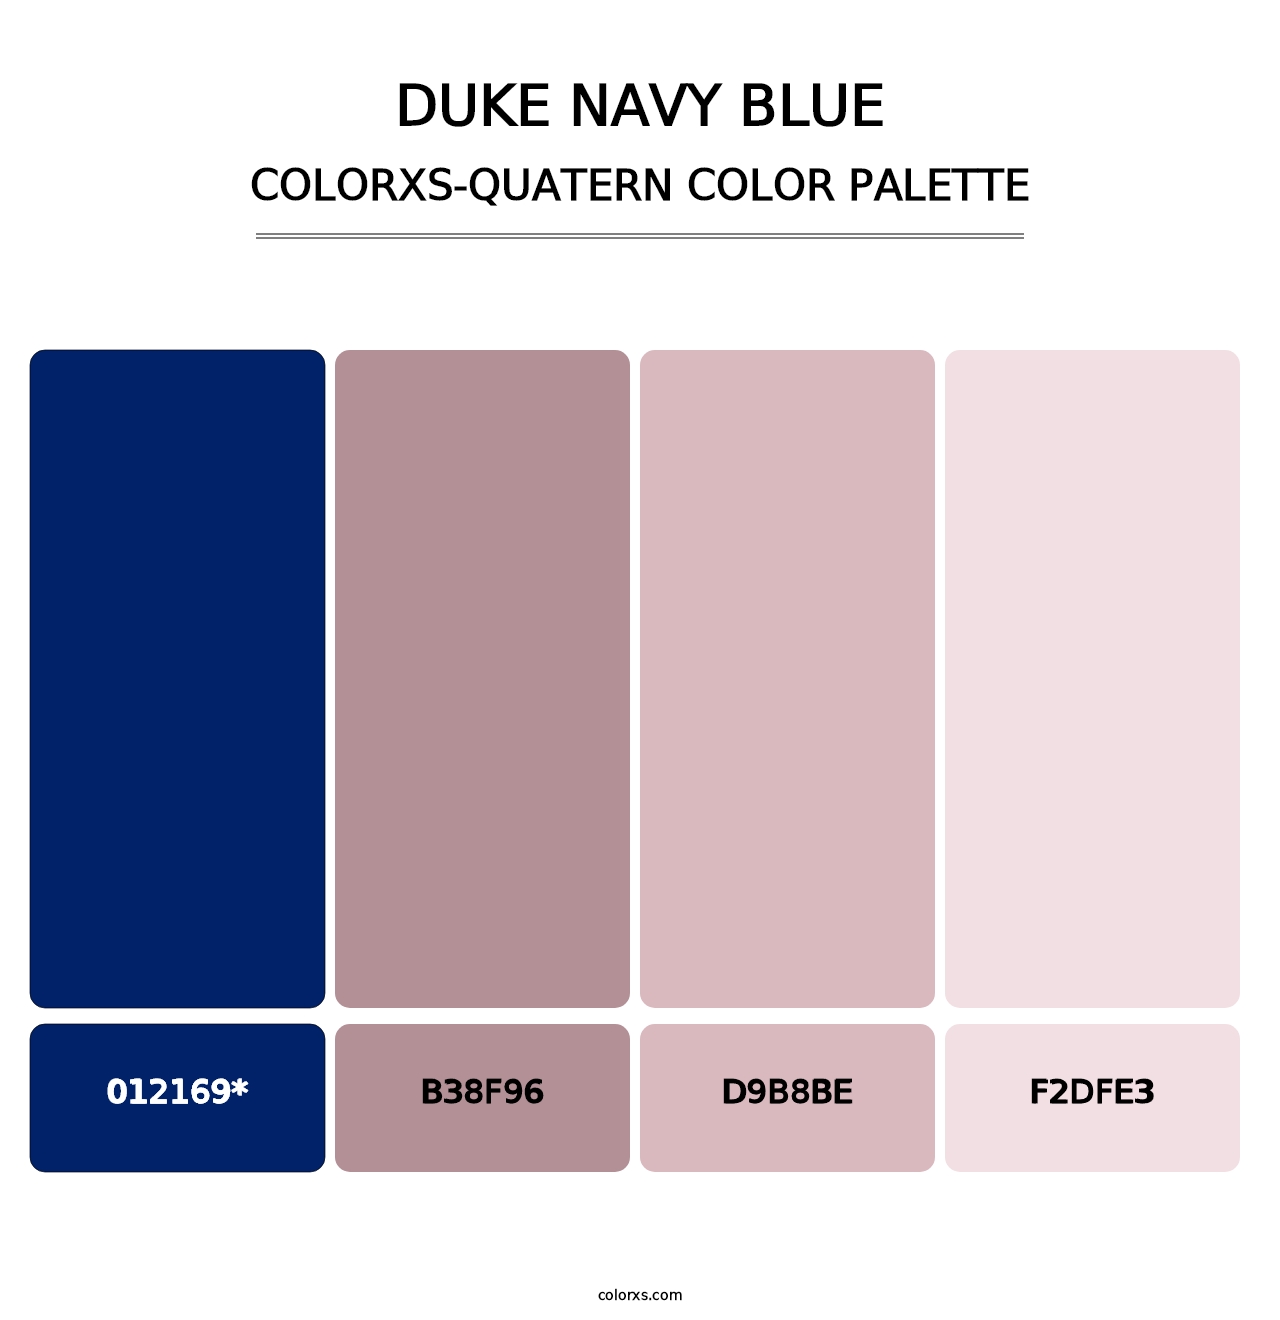 Duke Navy Blue - Colorxs Quatern Palette